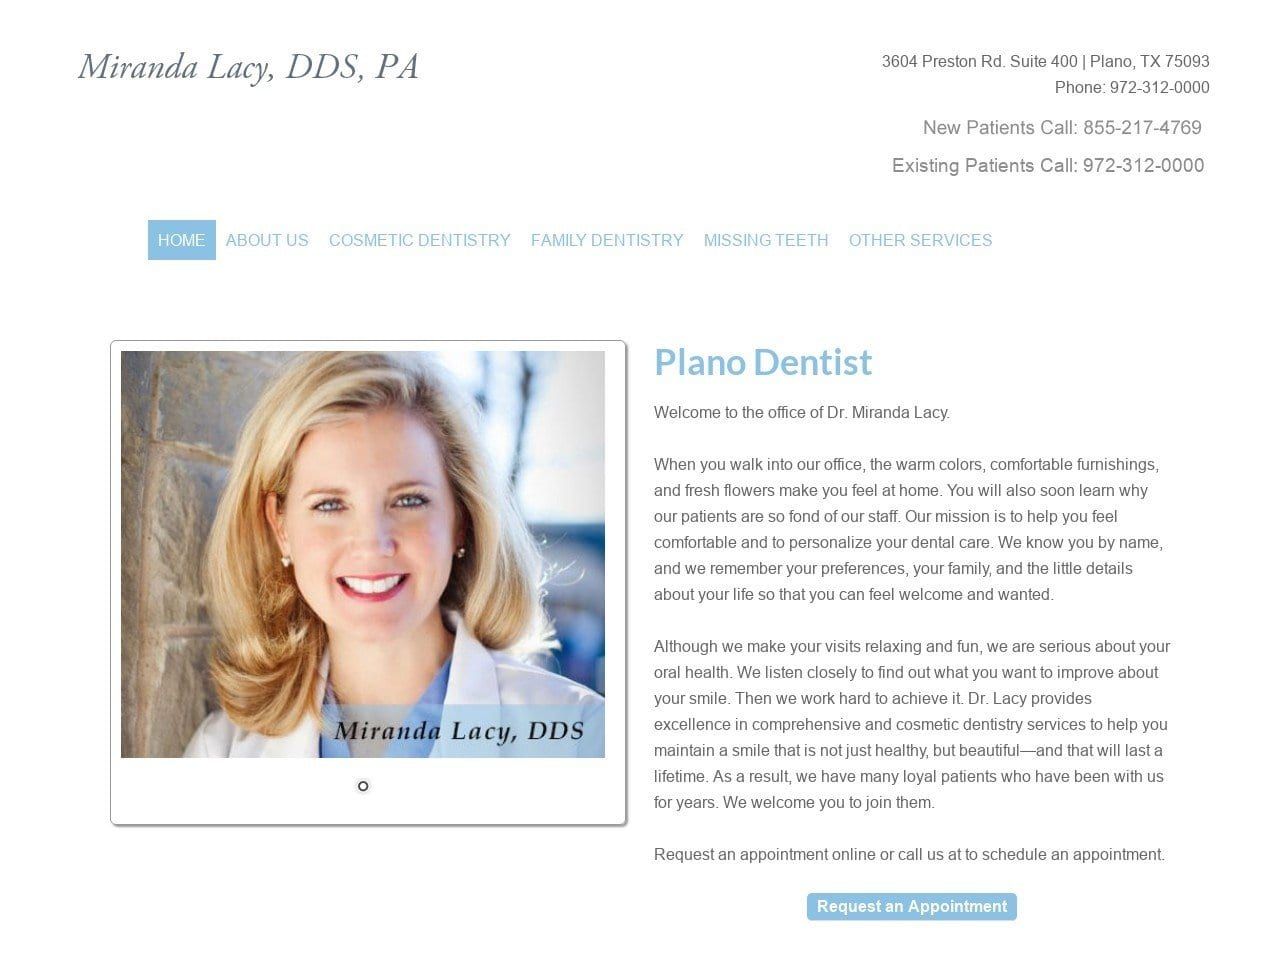 Dr. Miranda C. Lacy DDS Website Screenshot from mirandalacydds.com